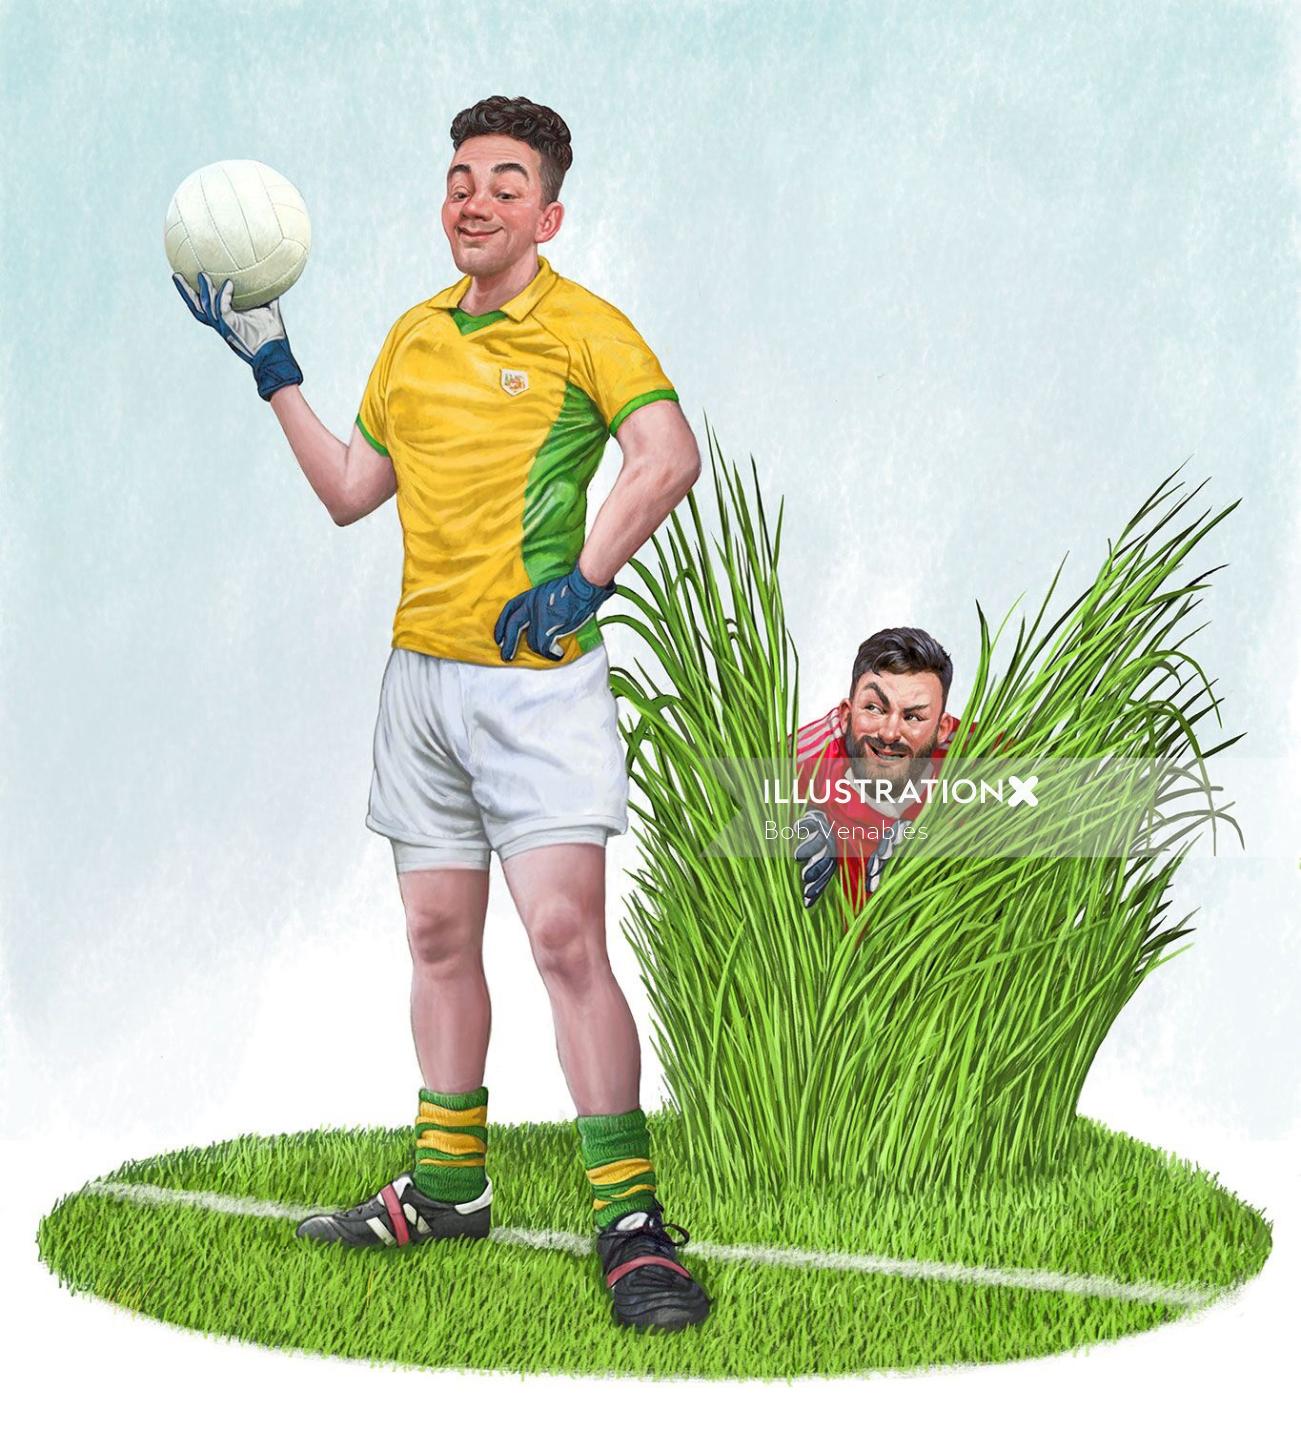 Art humoristique des joueurs de Food Ball pour The Irish Examiner